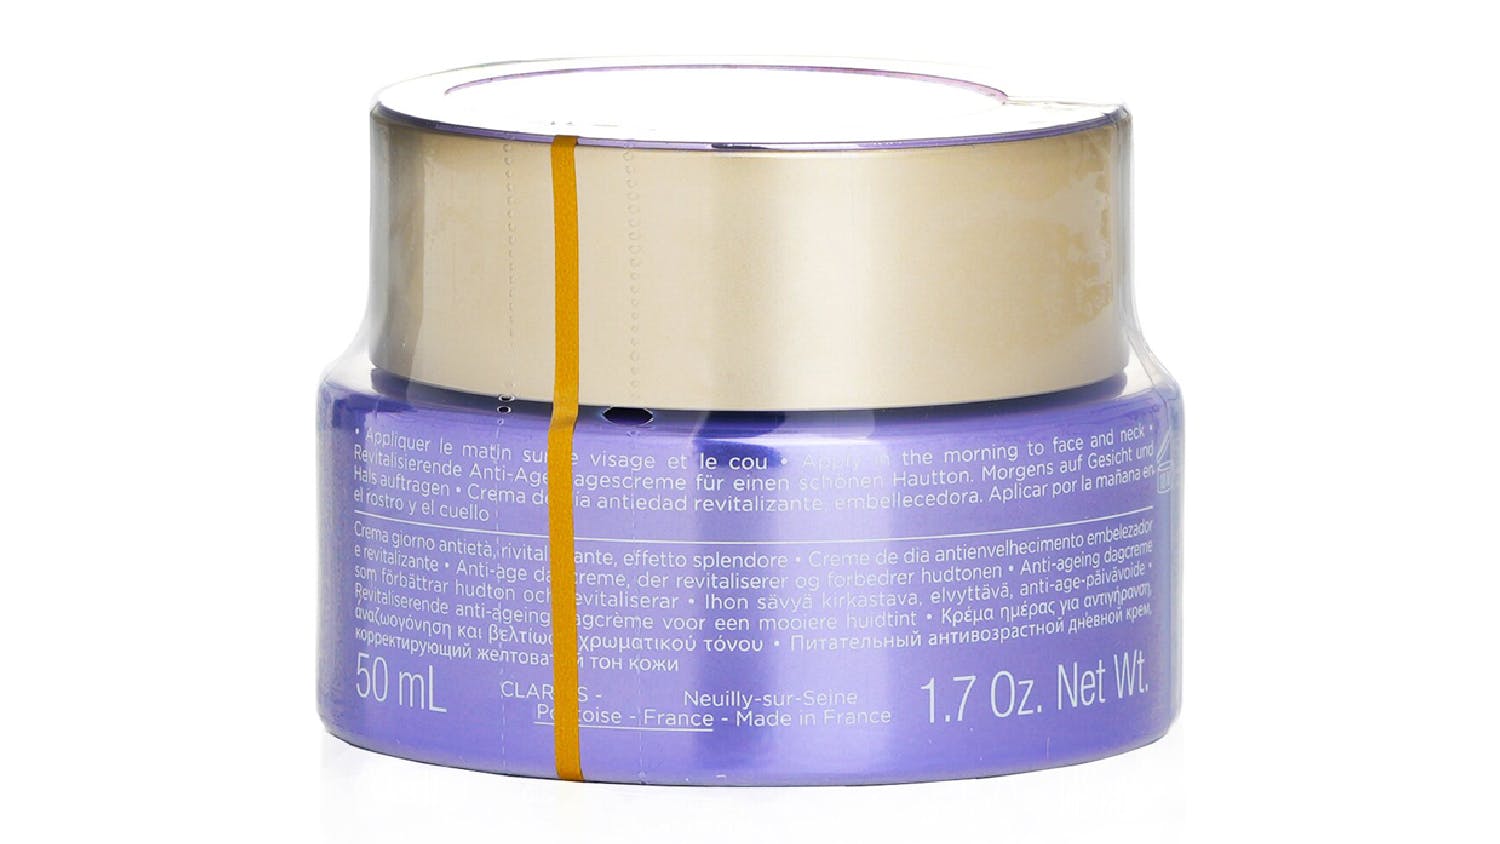 Clarins Nutri-Lumiere Revive Skin Tone Enhancing, Revitalizing Day Cream - 50ml/1.7oz